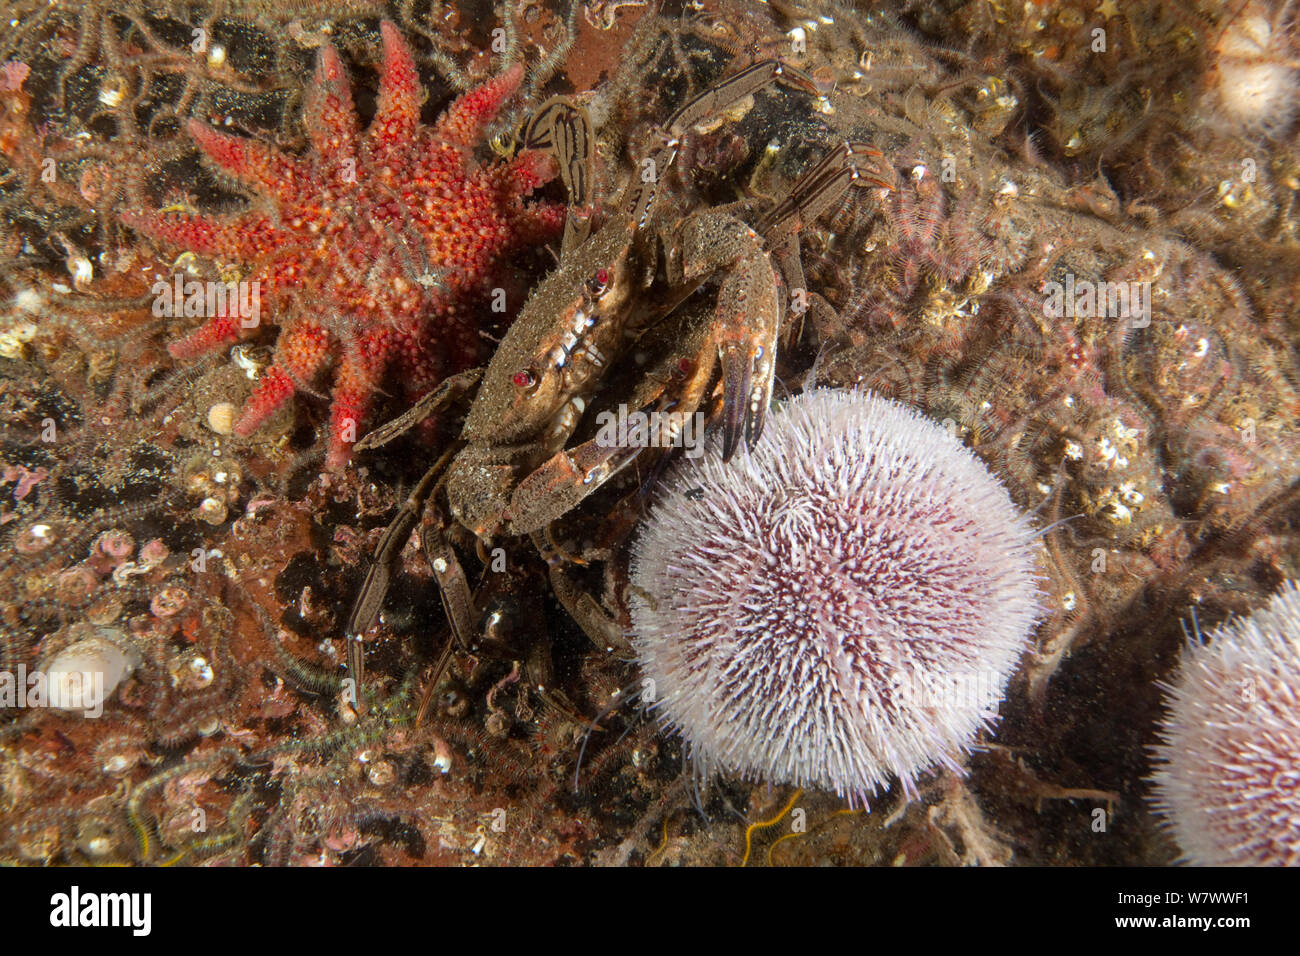 Common sun star (Crossaster papposus) Velvet Swimming Crab (Necora puber) and Common Sea Urchin (Echinus esculentus) St Abbs Voluntary Marine Reserve, Scotland (North Sea). Stock Photo